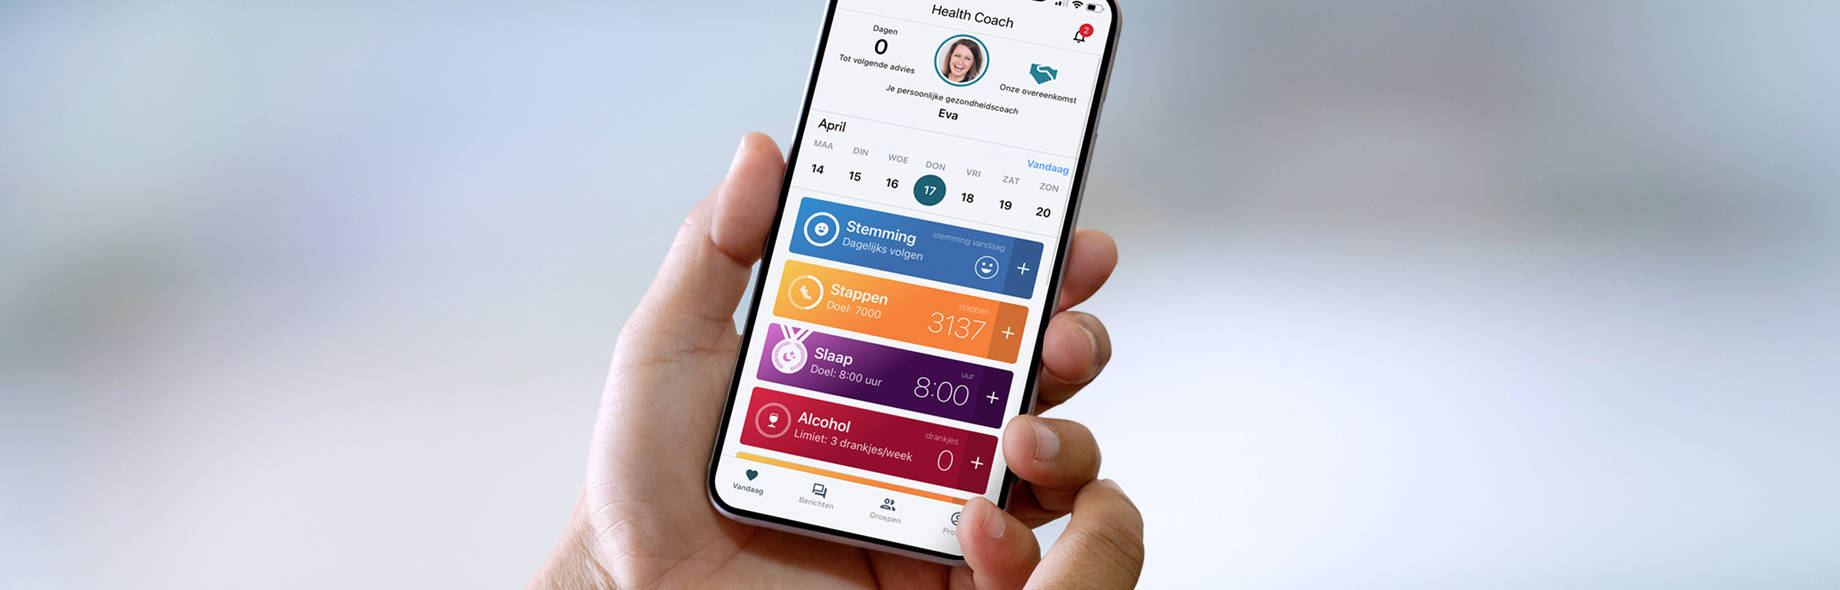 Mediq Health Coach App